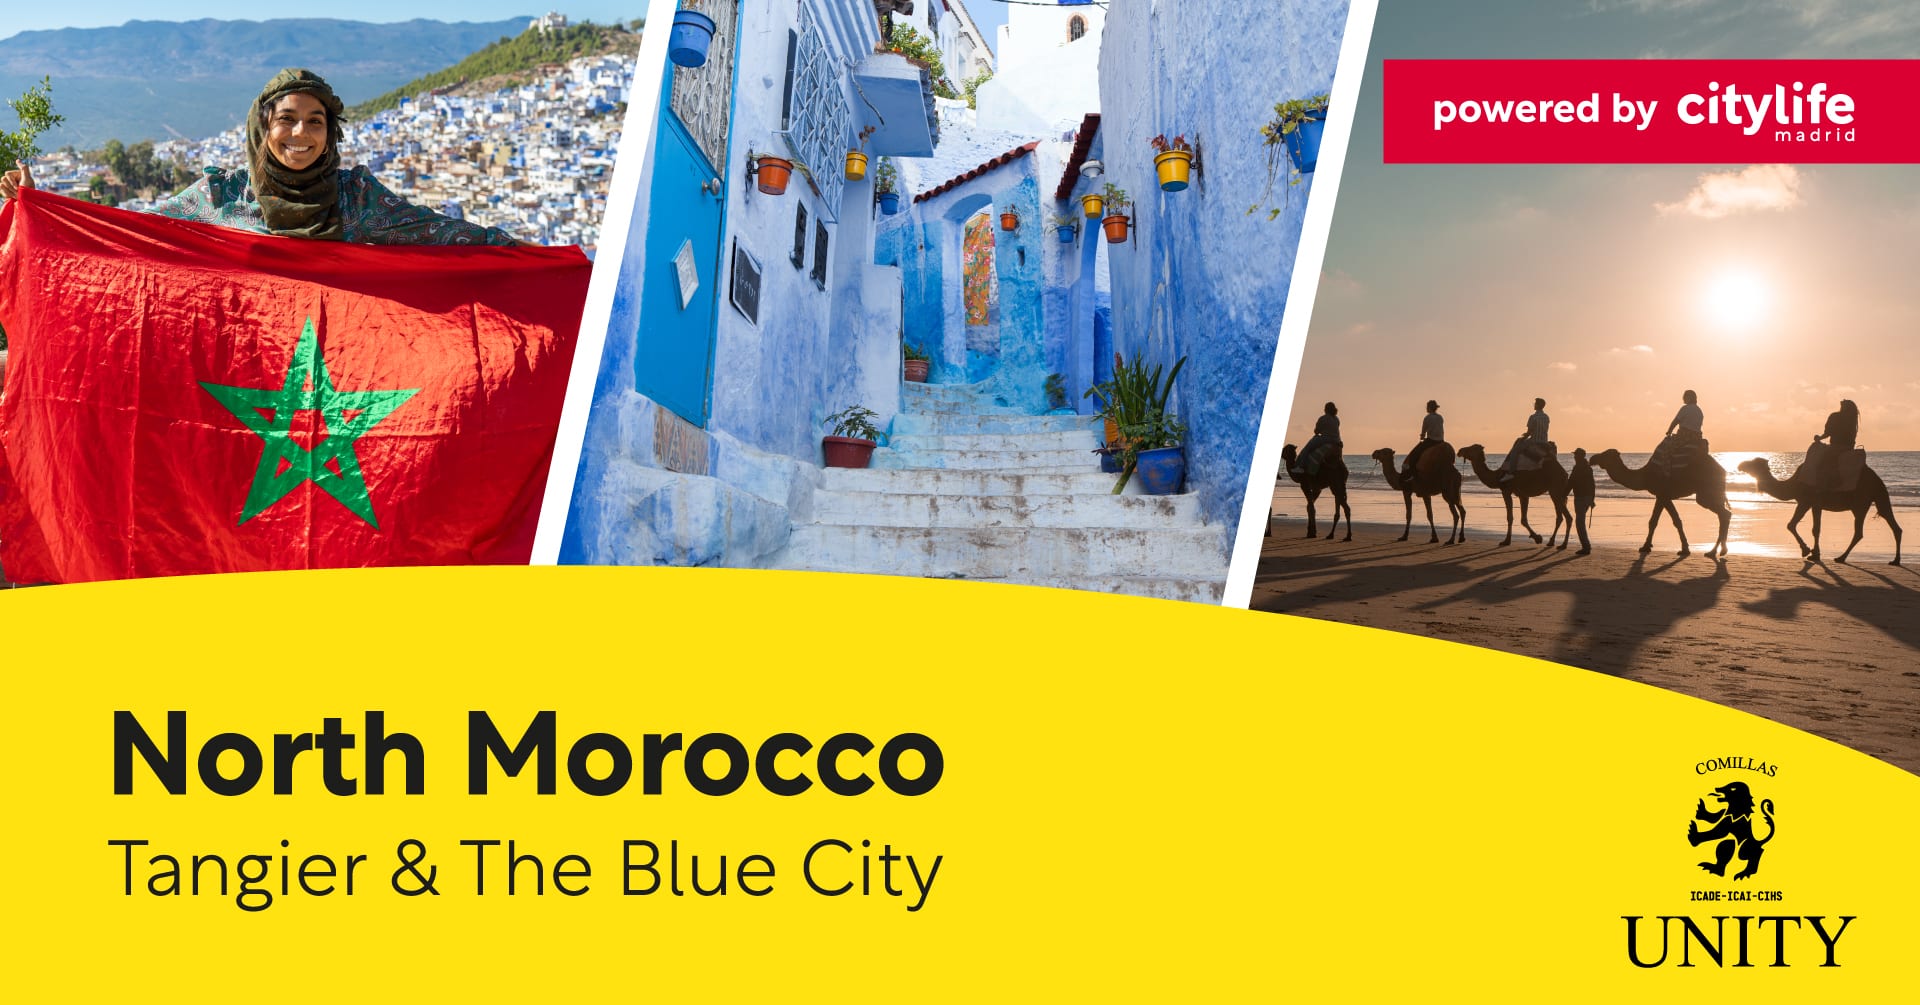 citylife-madrid-trips-north-morocco-unity-fb-event